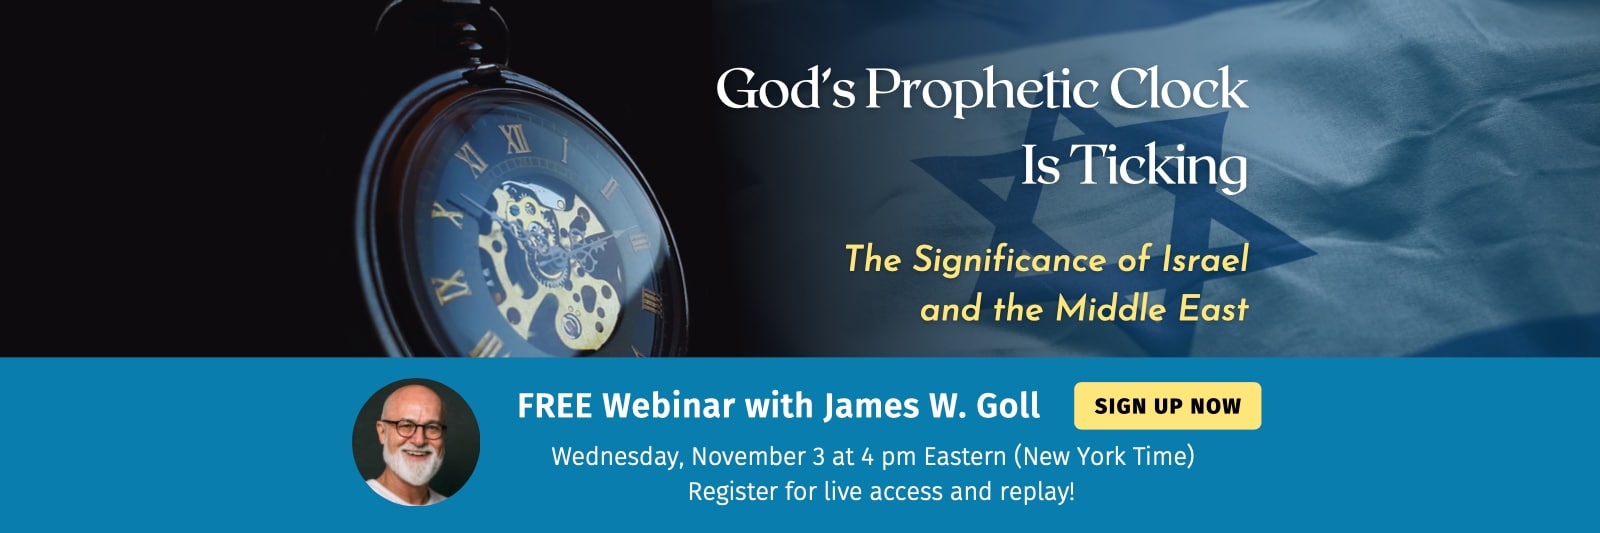 Free Webinar: God's Prophetic Clock is Ticking